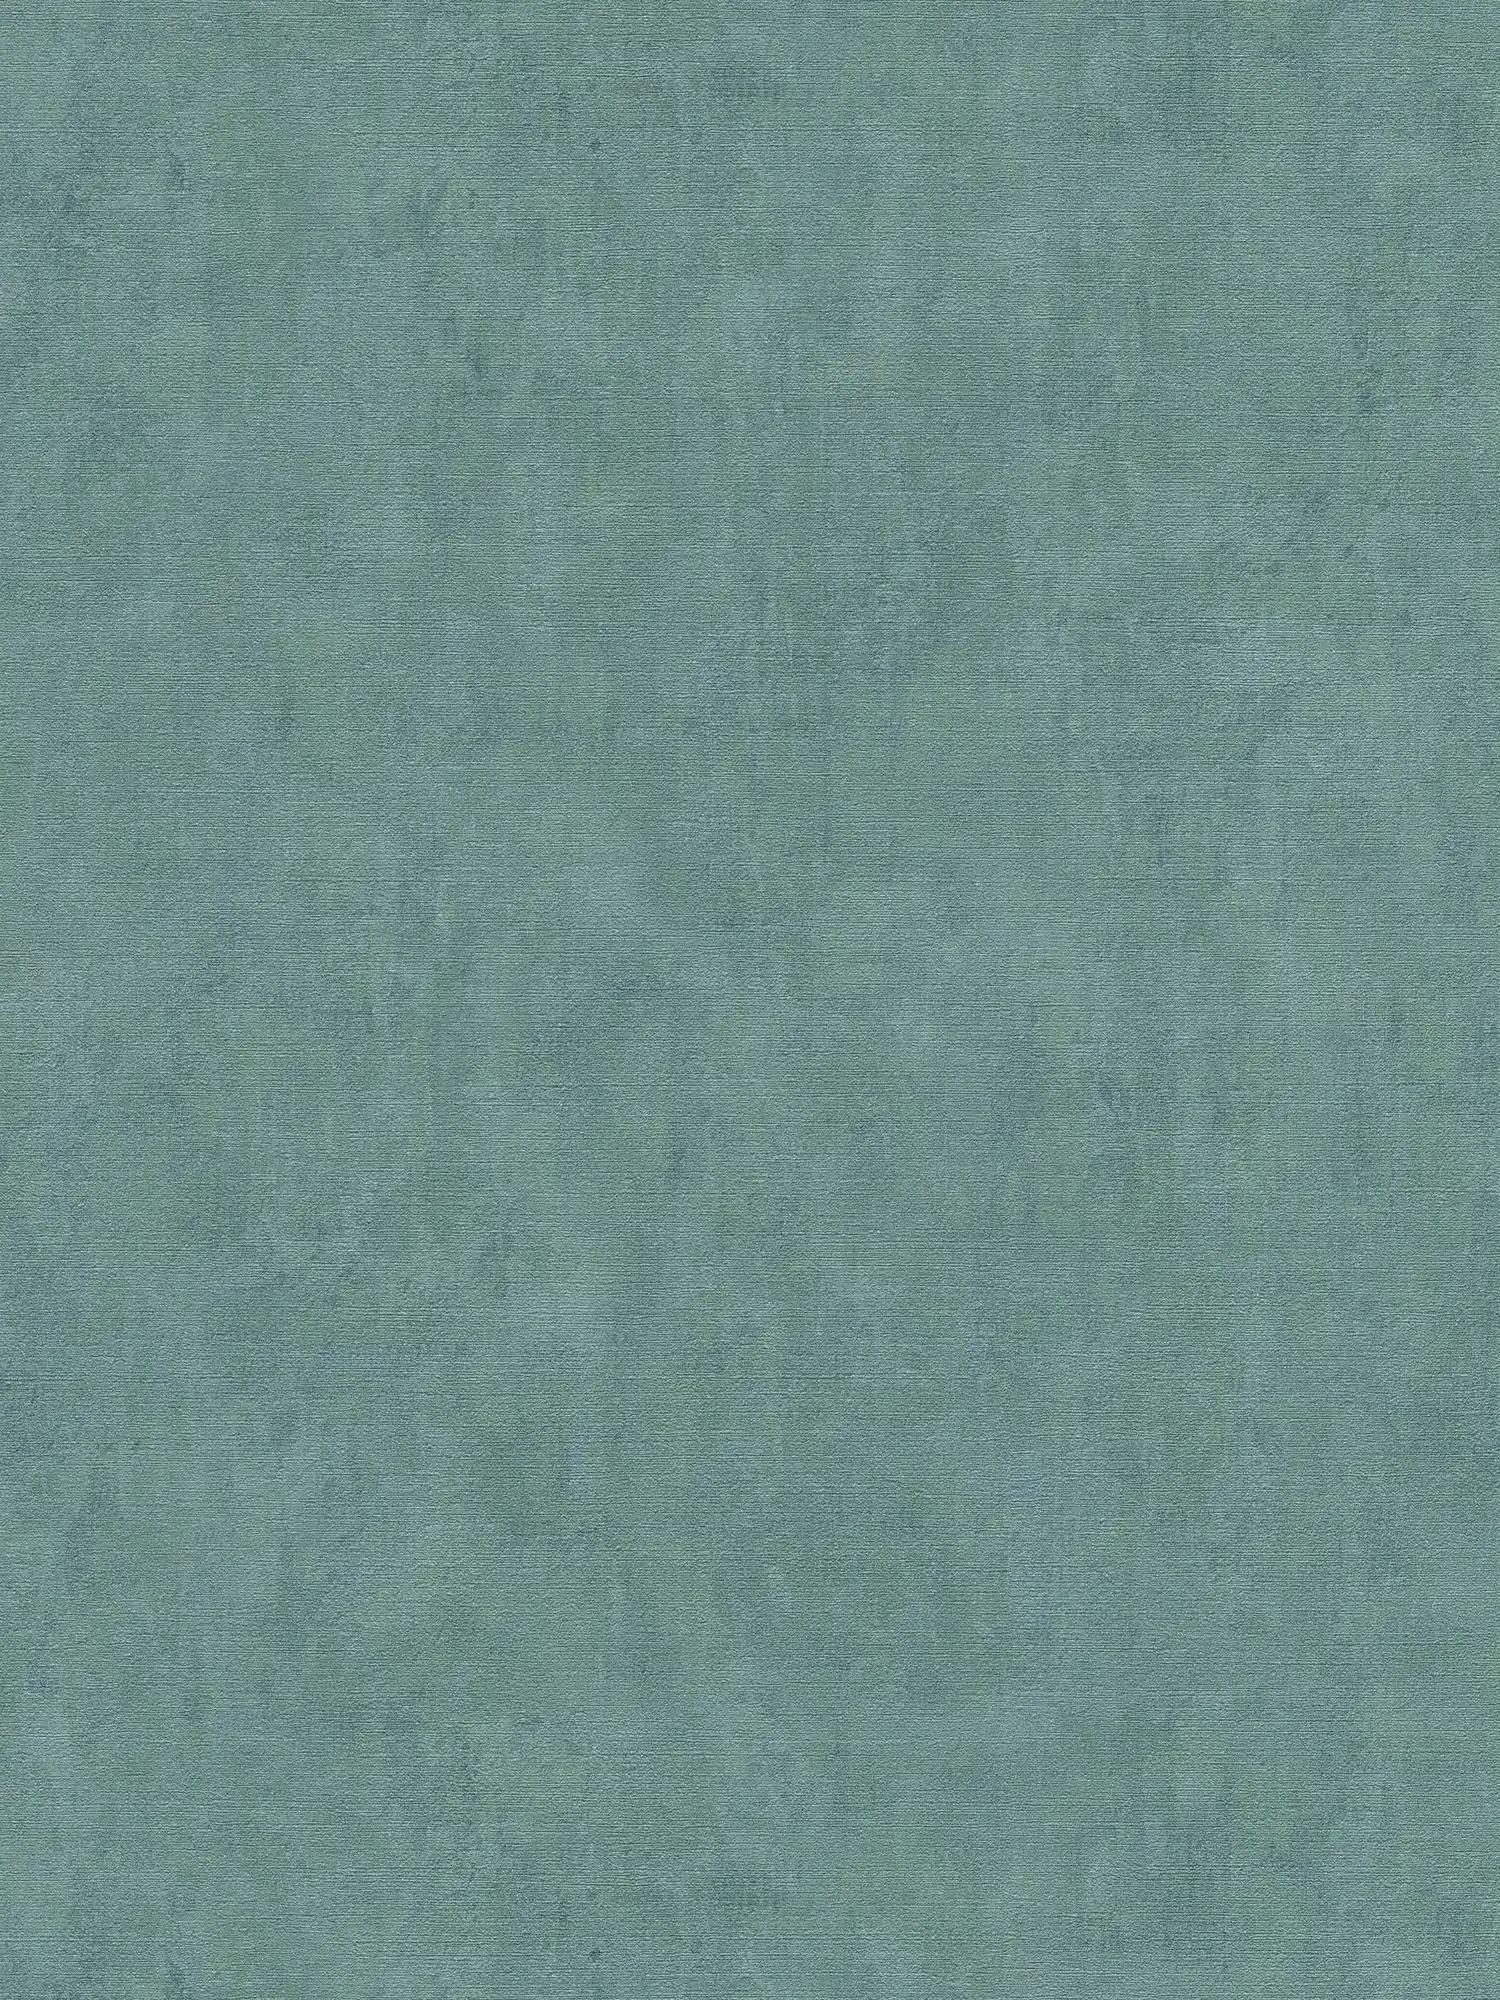 Effen behang petrol gevlekte groene accenten - Blauw, Groen
